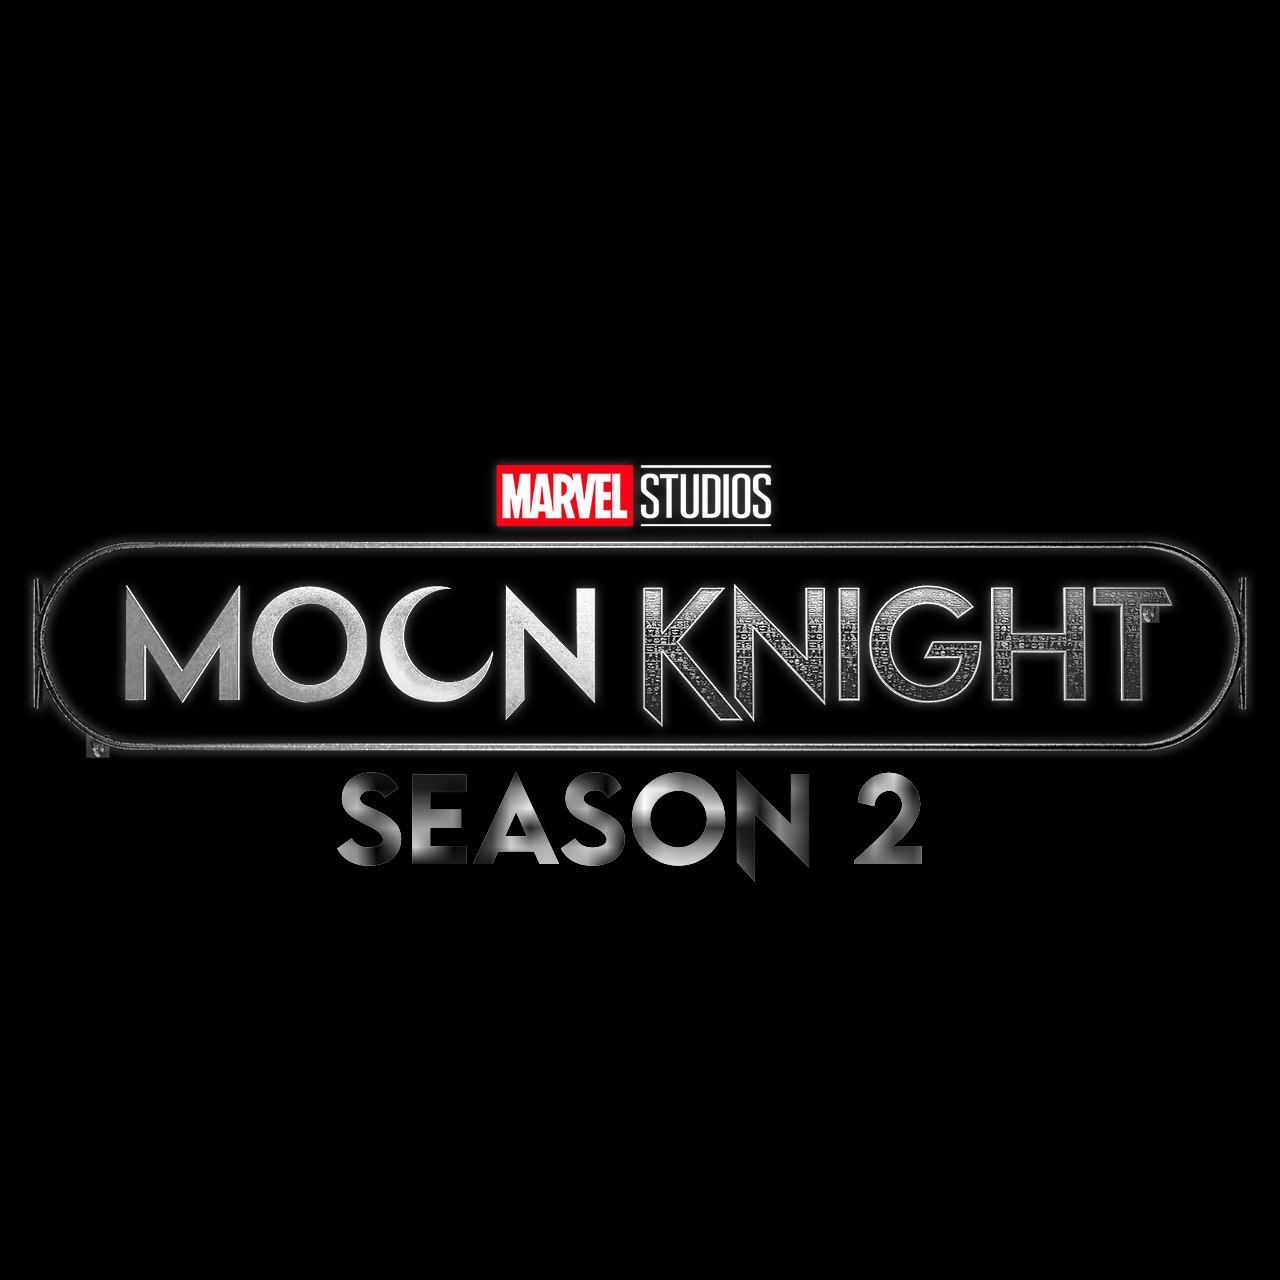 Marvel Studios MoonKnight Season 2 Title Revealed by xXMCUFan2020Xx on  DeviantArt